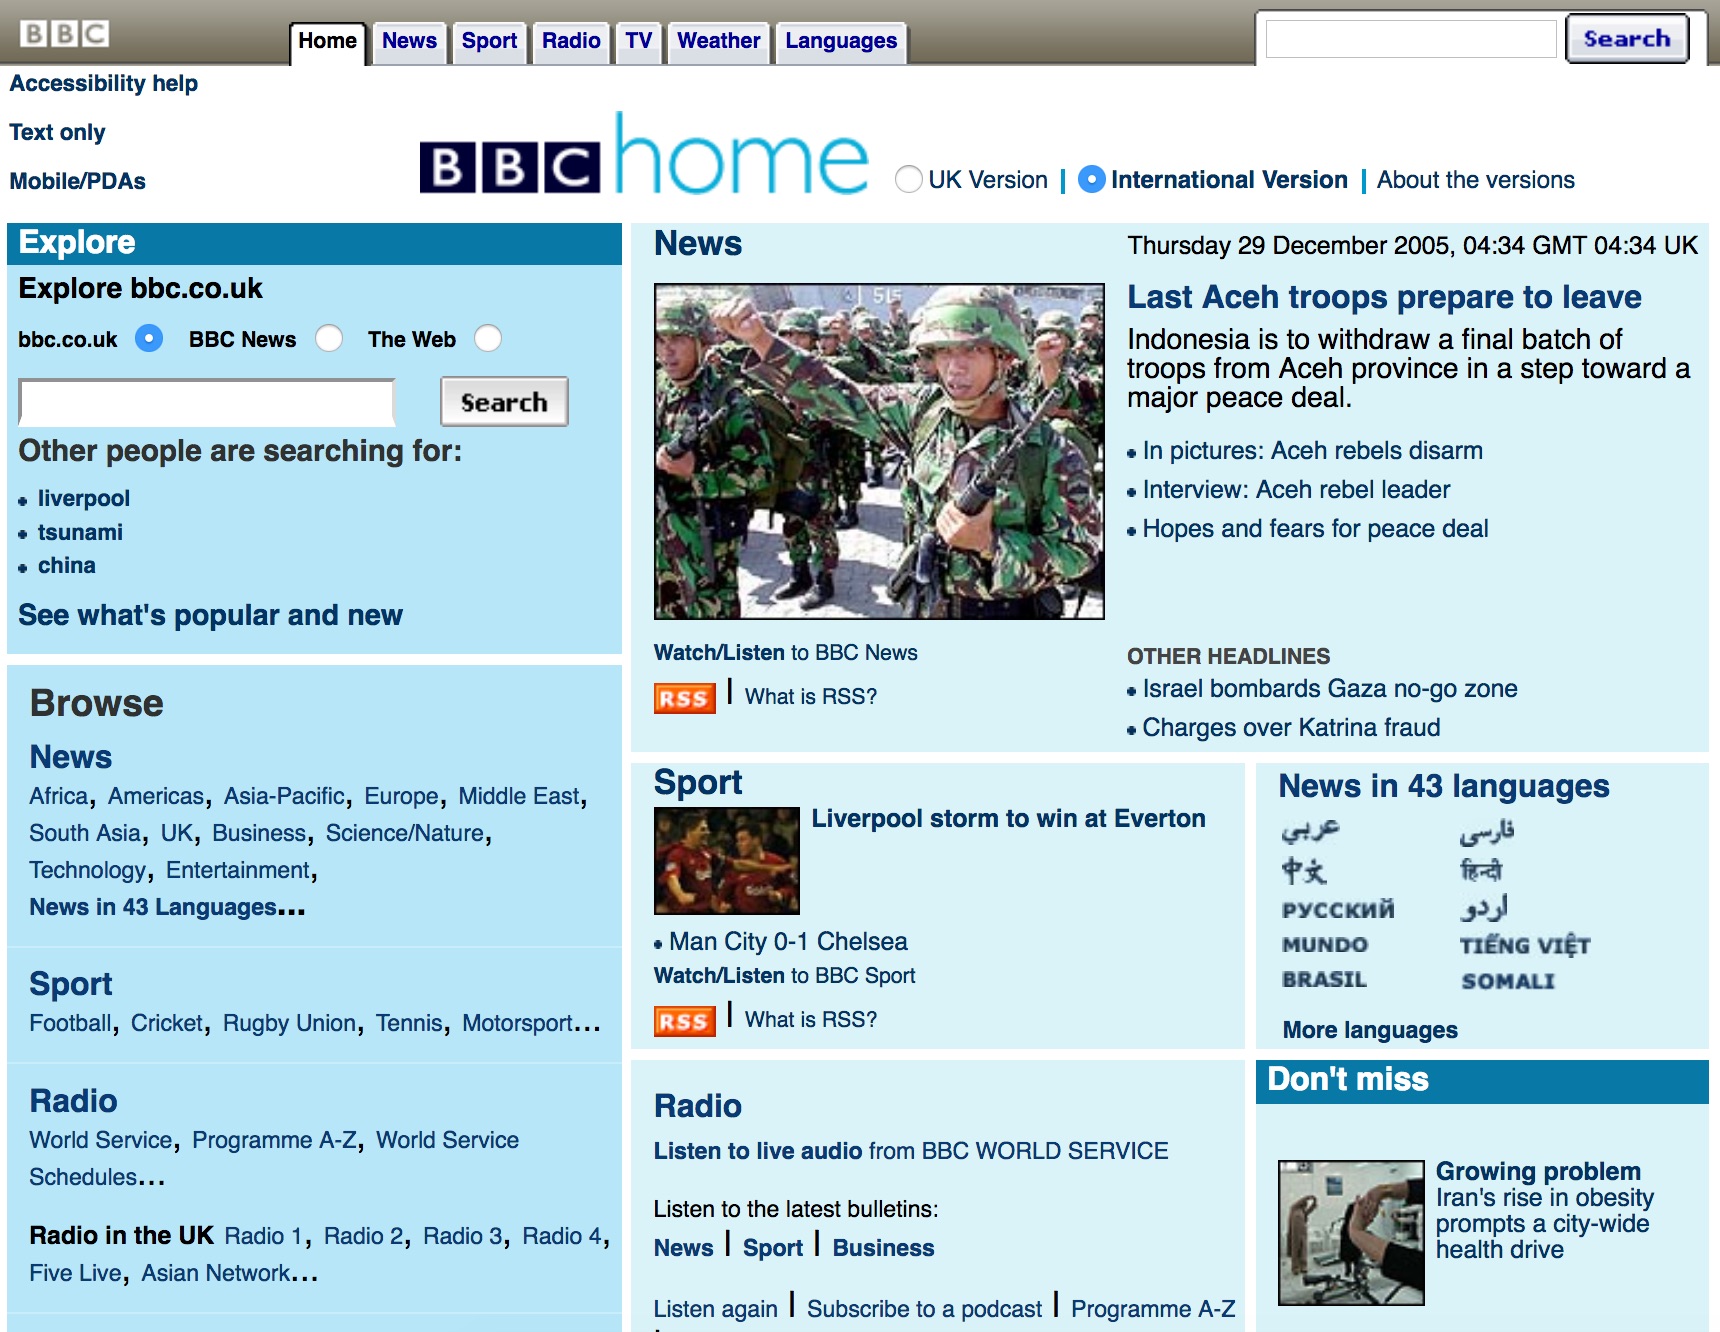 BBC.co.uk homepage (2005)